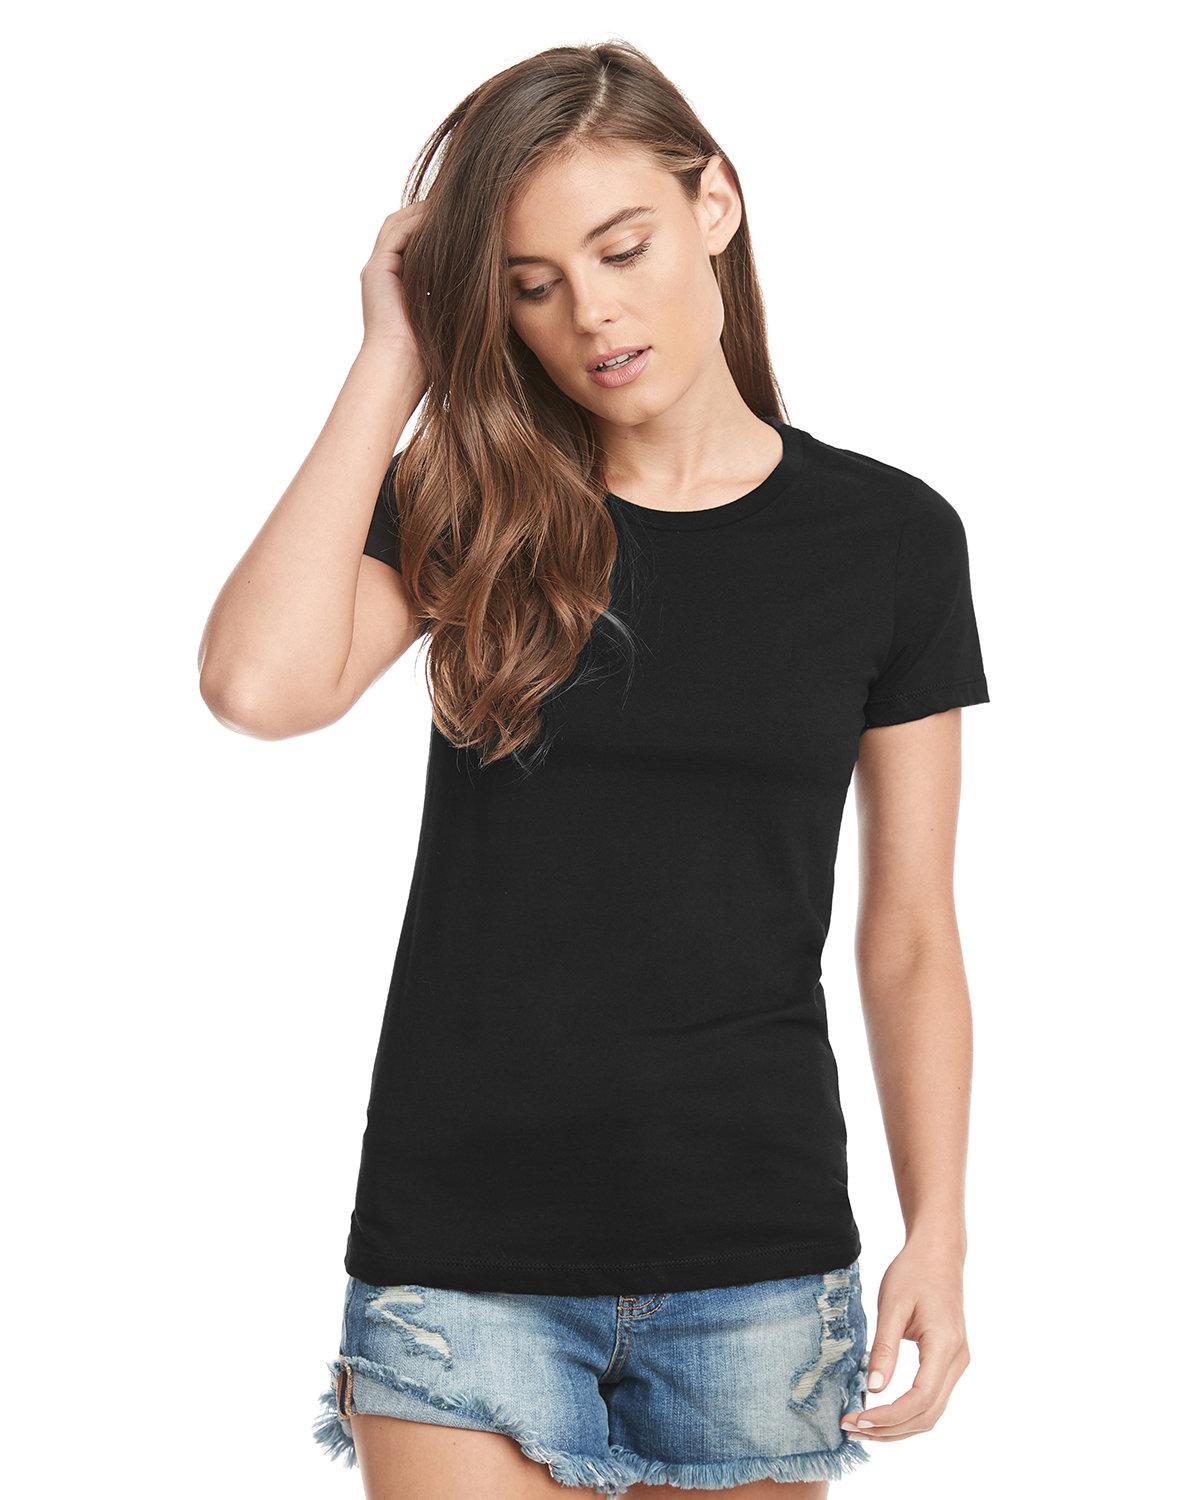 Next Level 3900A Ladies' Made in USA Boyfriend T-Shirt - Shirtmax